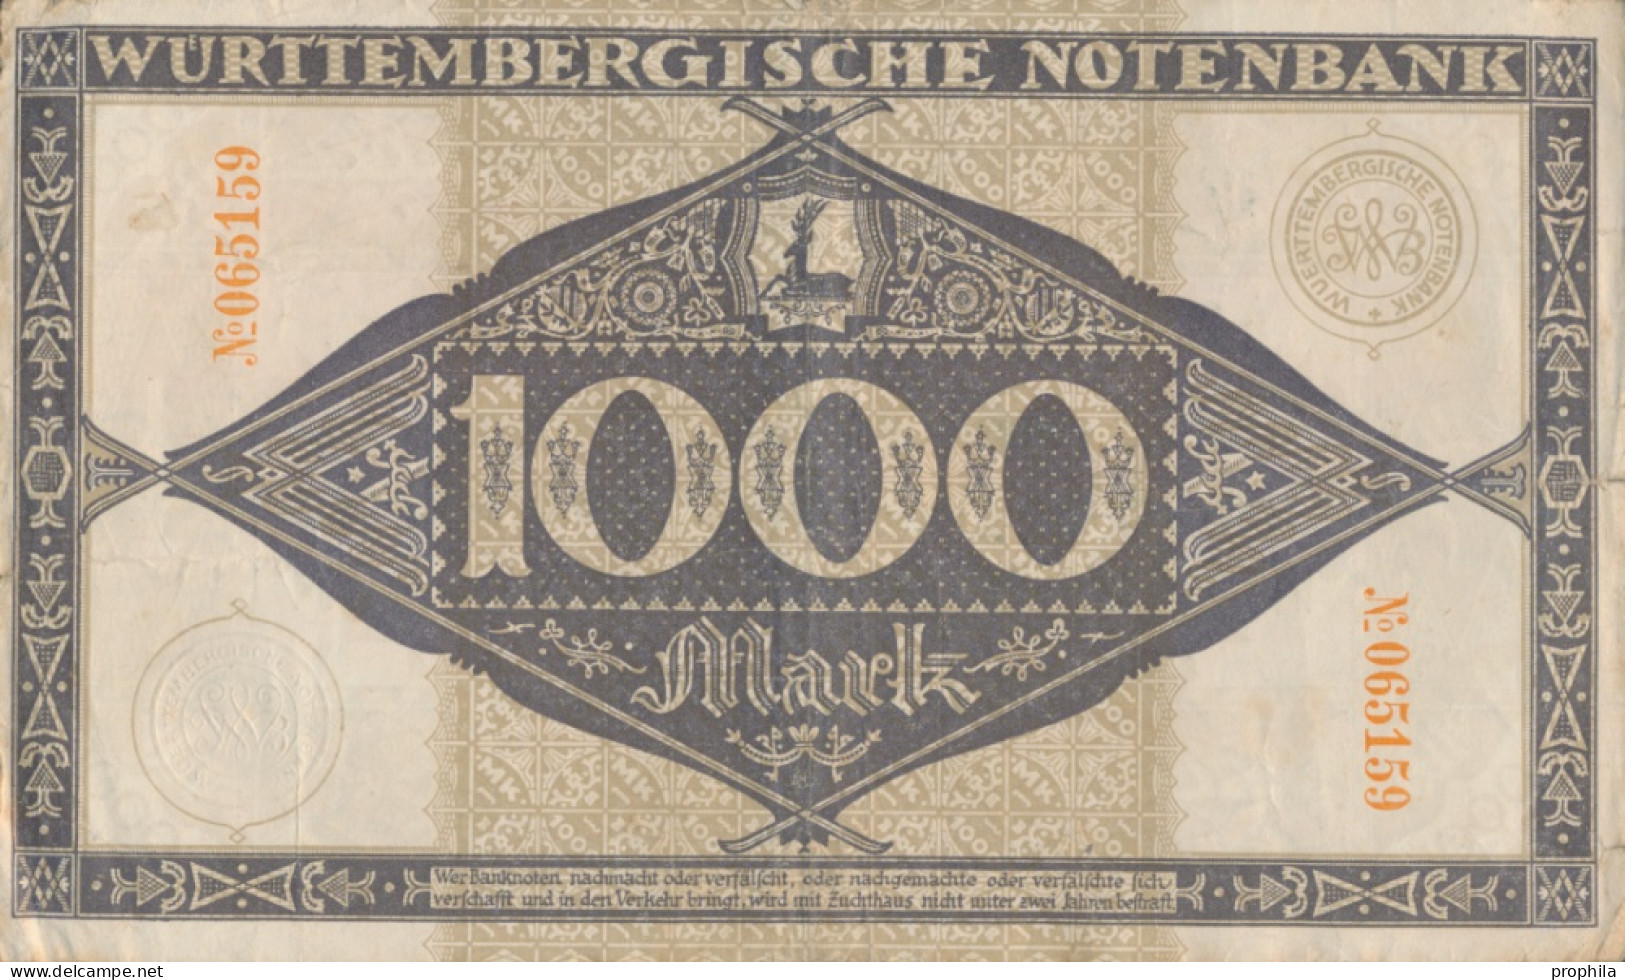 Württemberg Rosenbg: WTB12a Länderbanknote Württemberg, Vs. Mit Handunterschrift Stark Gebraucht (IV) 1922  (10288530 - 1000 Mark